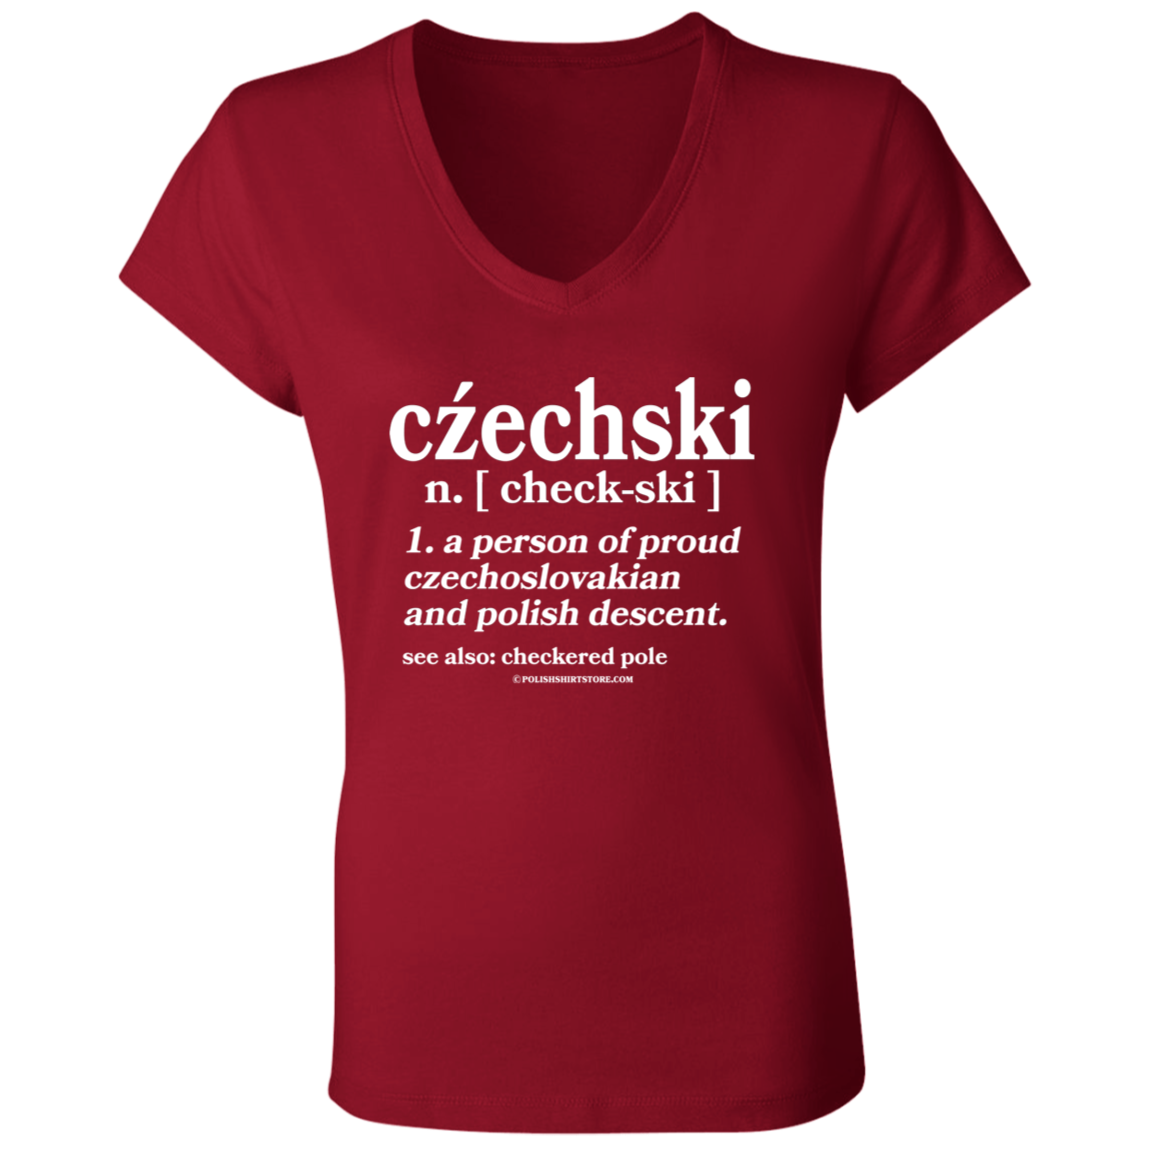 Checkski A Person Of Czechoslovakian Polish Descent Apparel CustomCat   